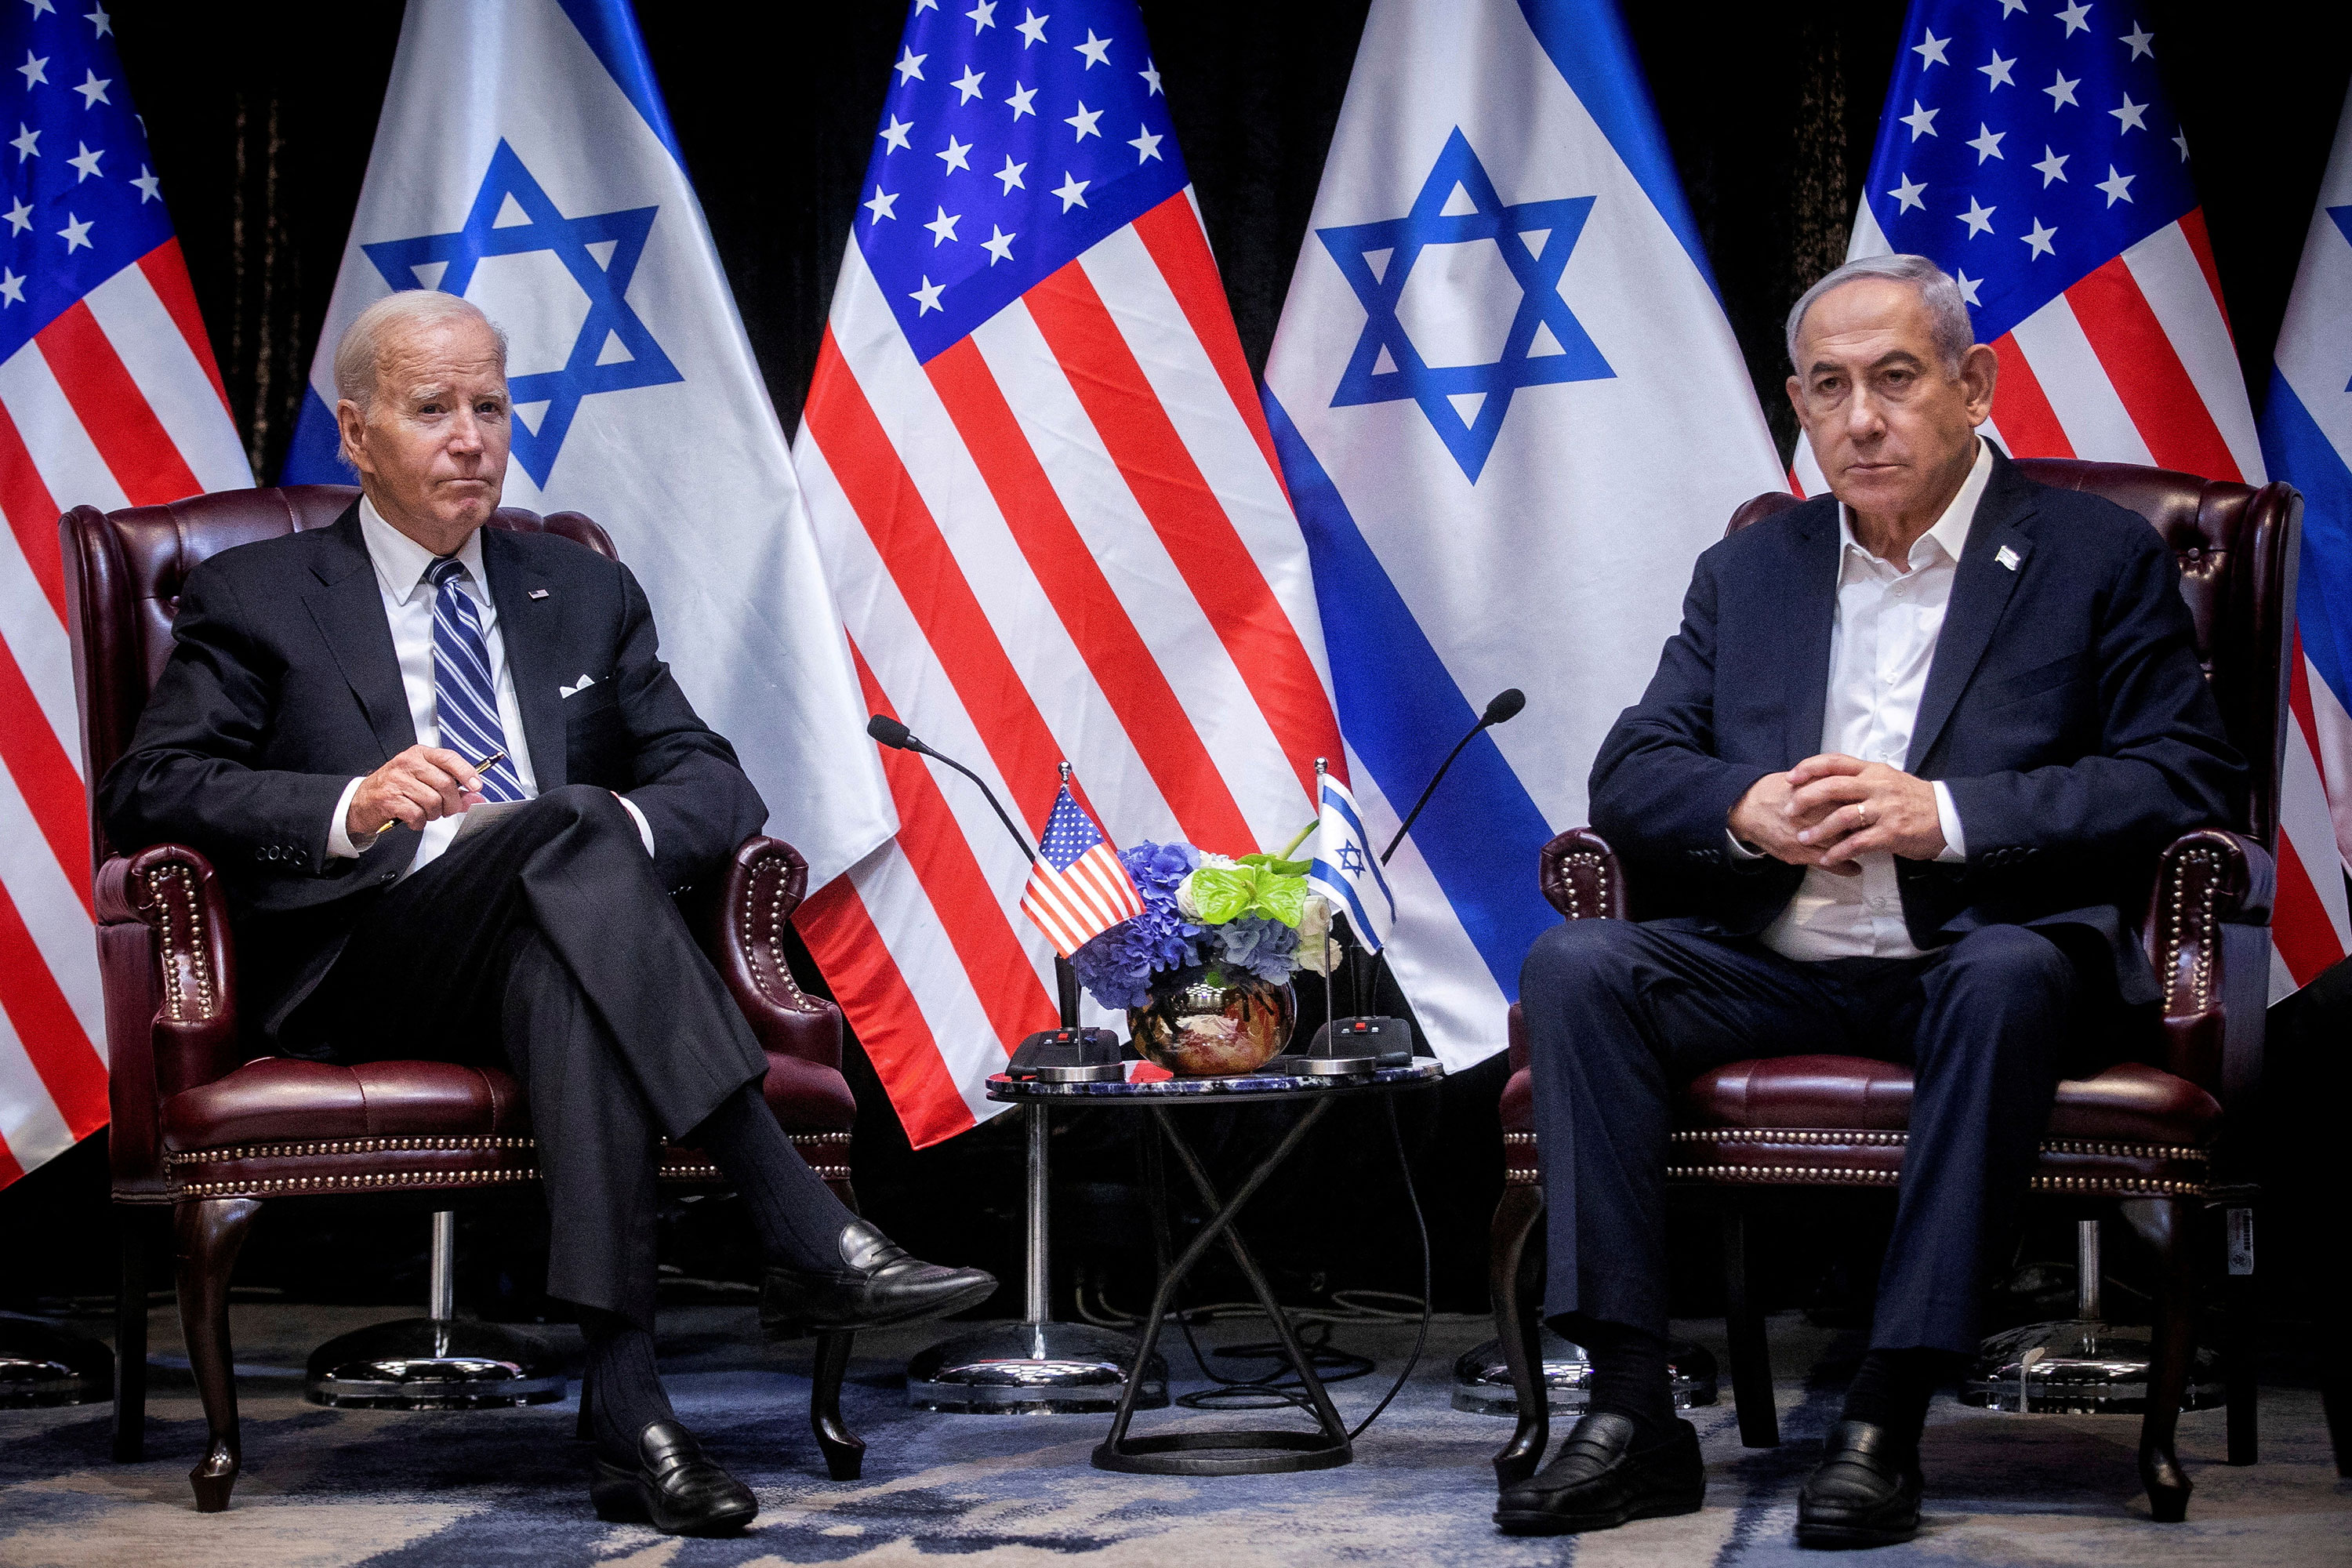 President Joe Biden and Israeli Prime Minister Benjamin Netanyahu pose for photos before a meeting in Tel Aviv, Israel, on October 18.